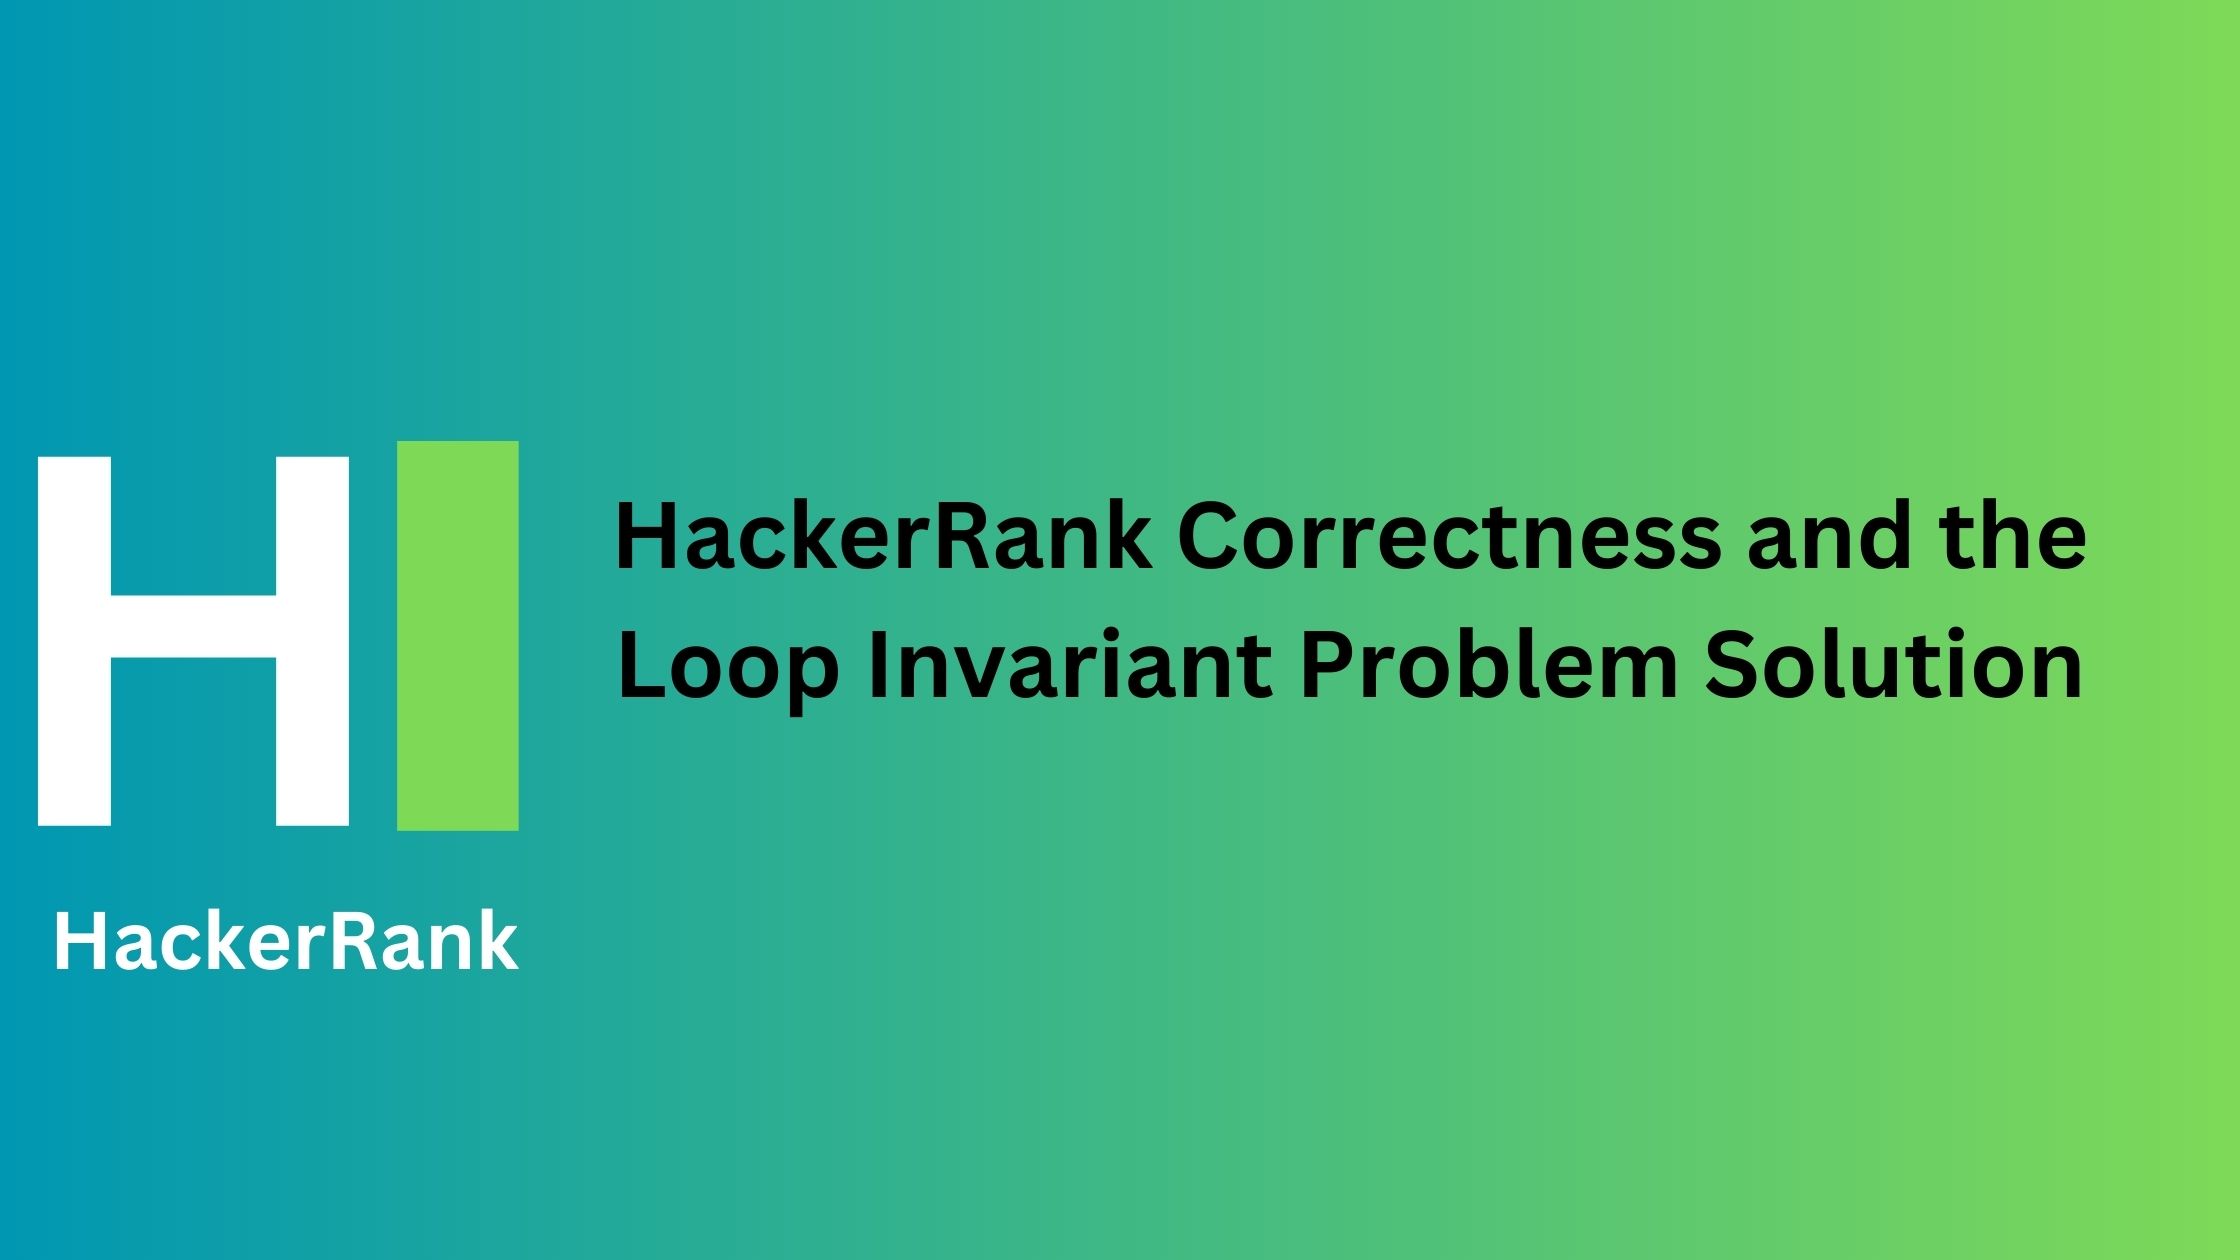 HackerRank Correctness and the Loop Invariant